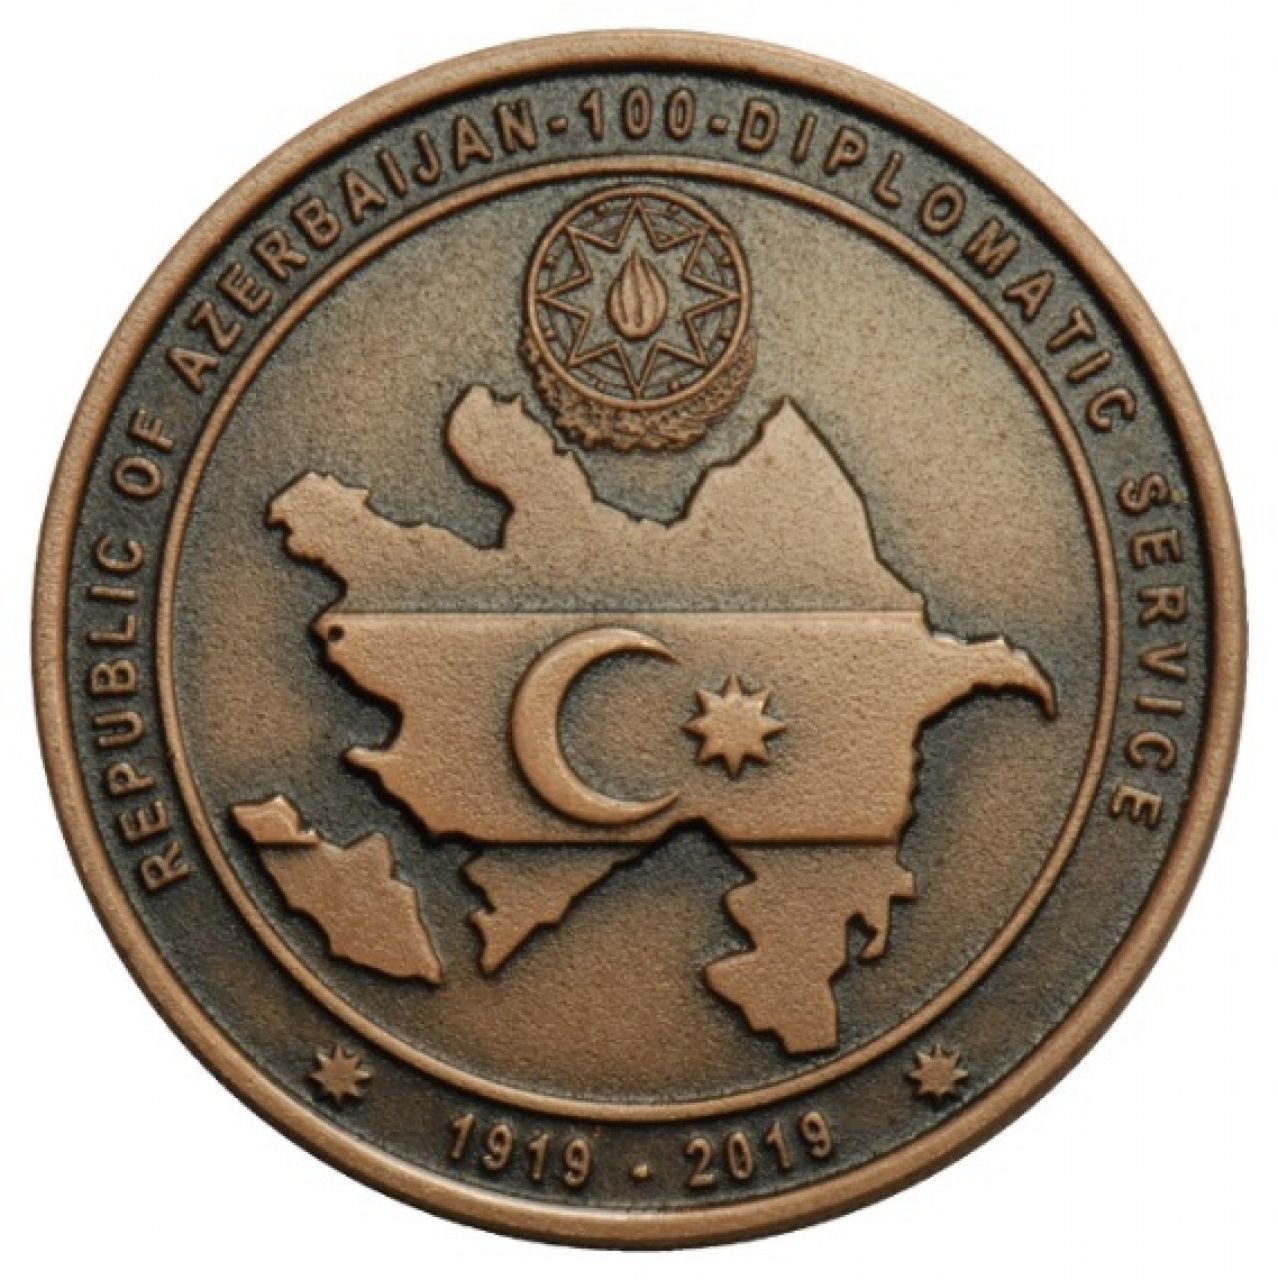 2019 Yılı 2.5 Lira Azerbaycan Hatıra Para Sertifikalı Çil